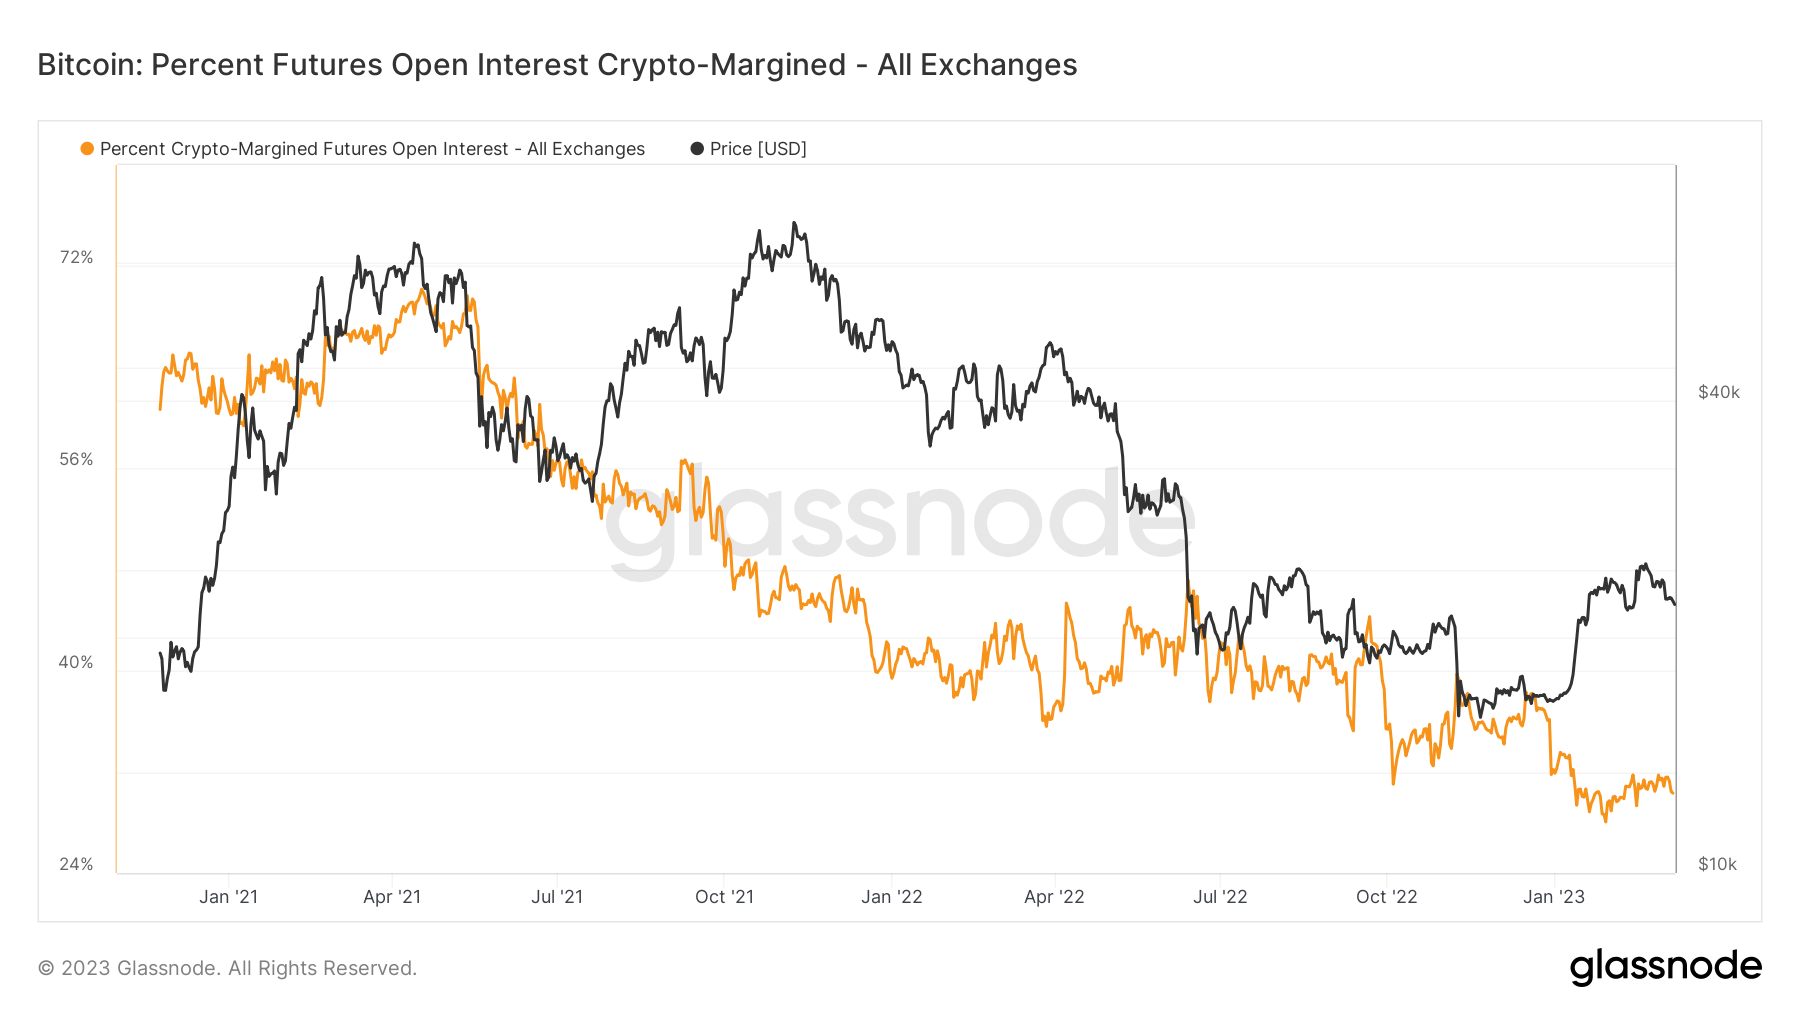 Futures Open Interest Crypto Margined: (Quelle: Glassnode)